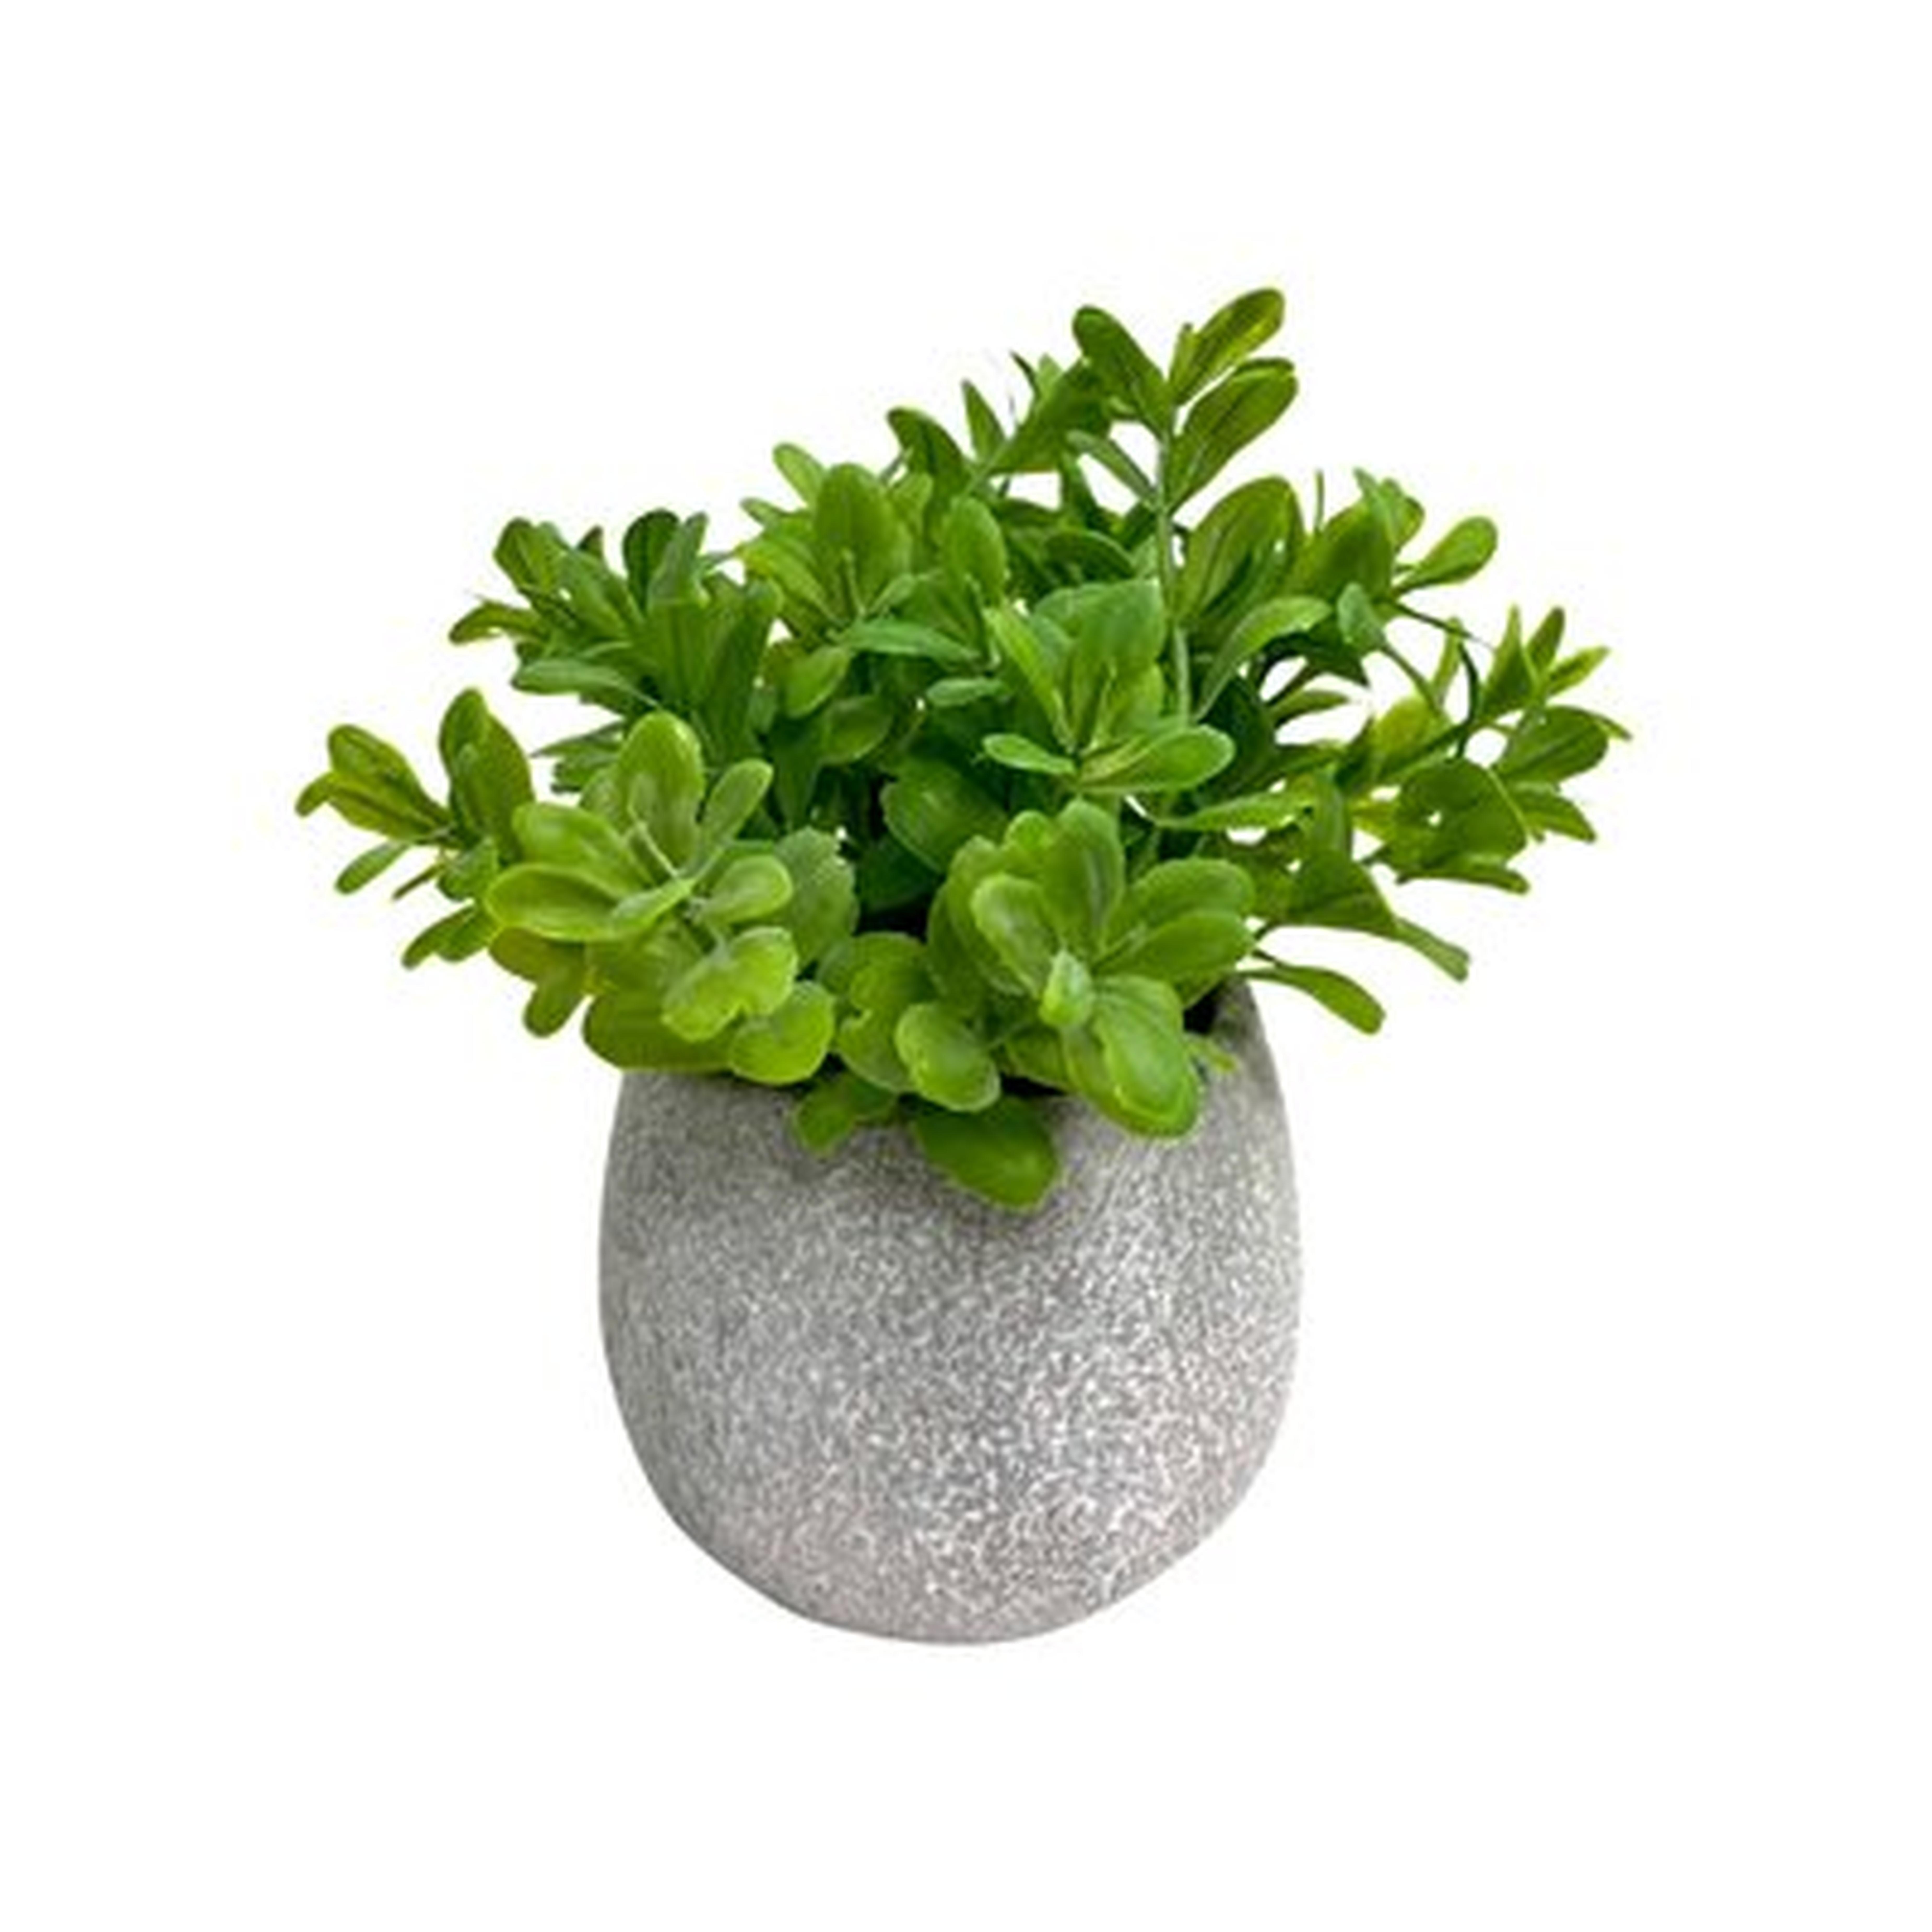 6"Lush Green Boxwood In Natural Cement Pot - Wayfair